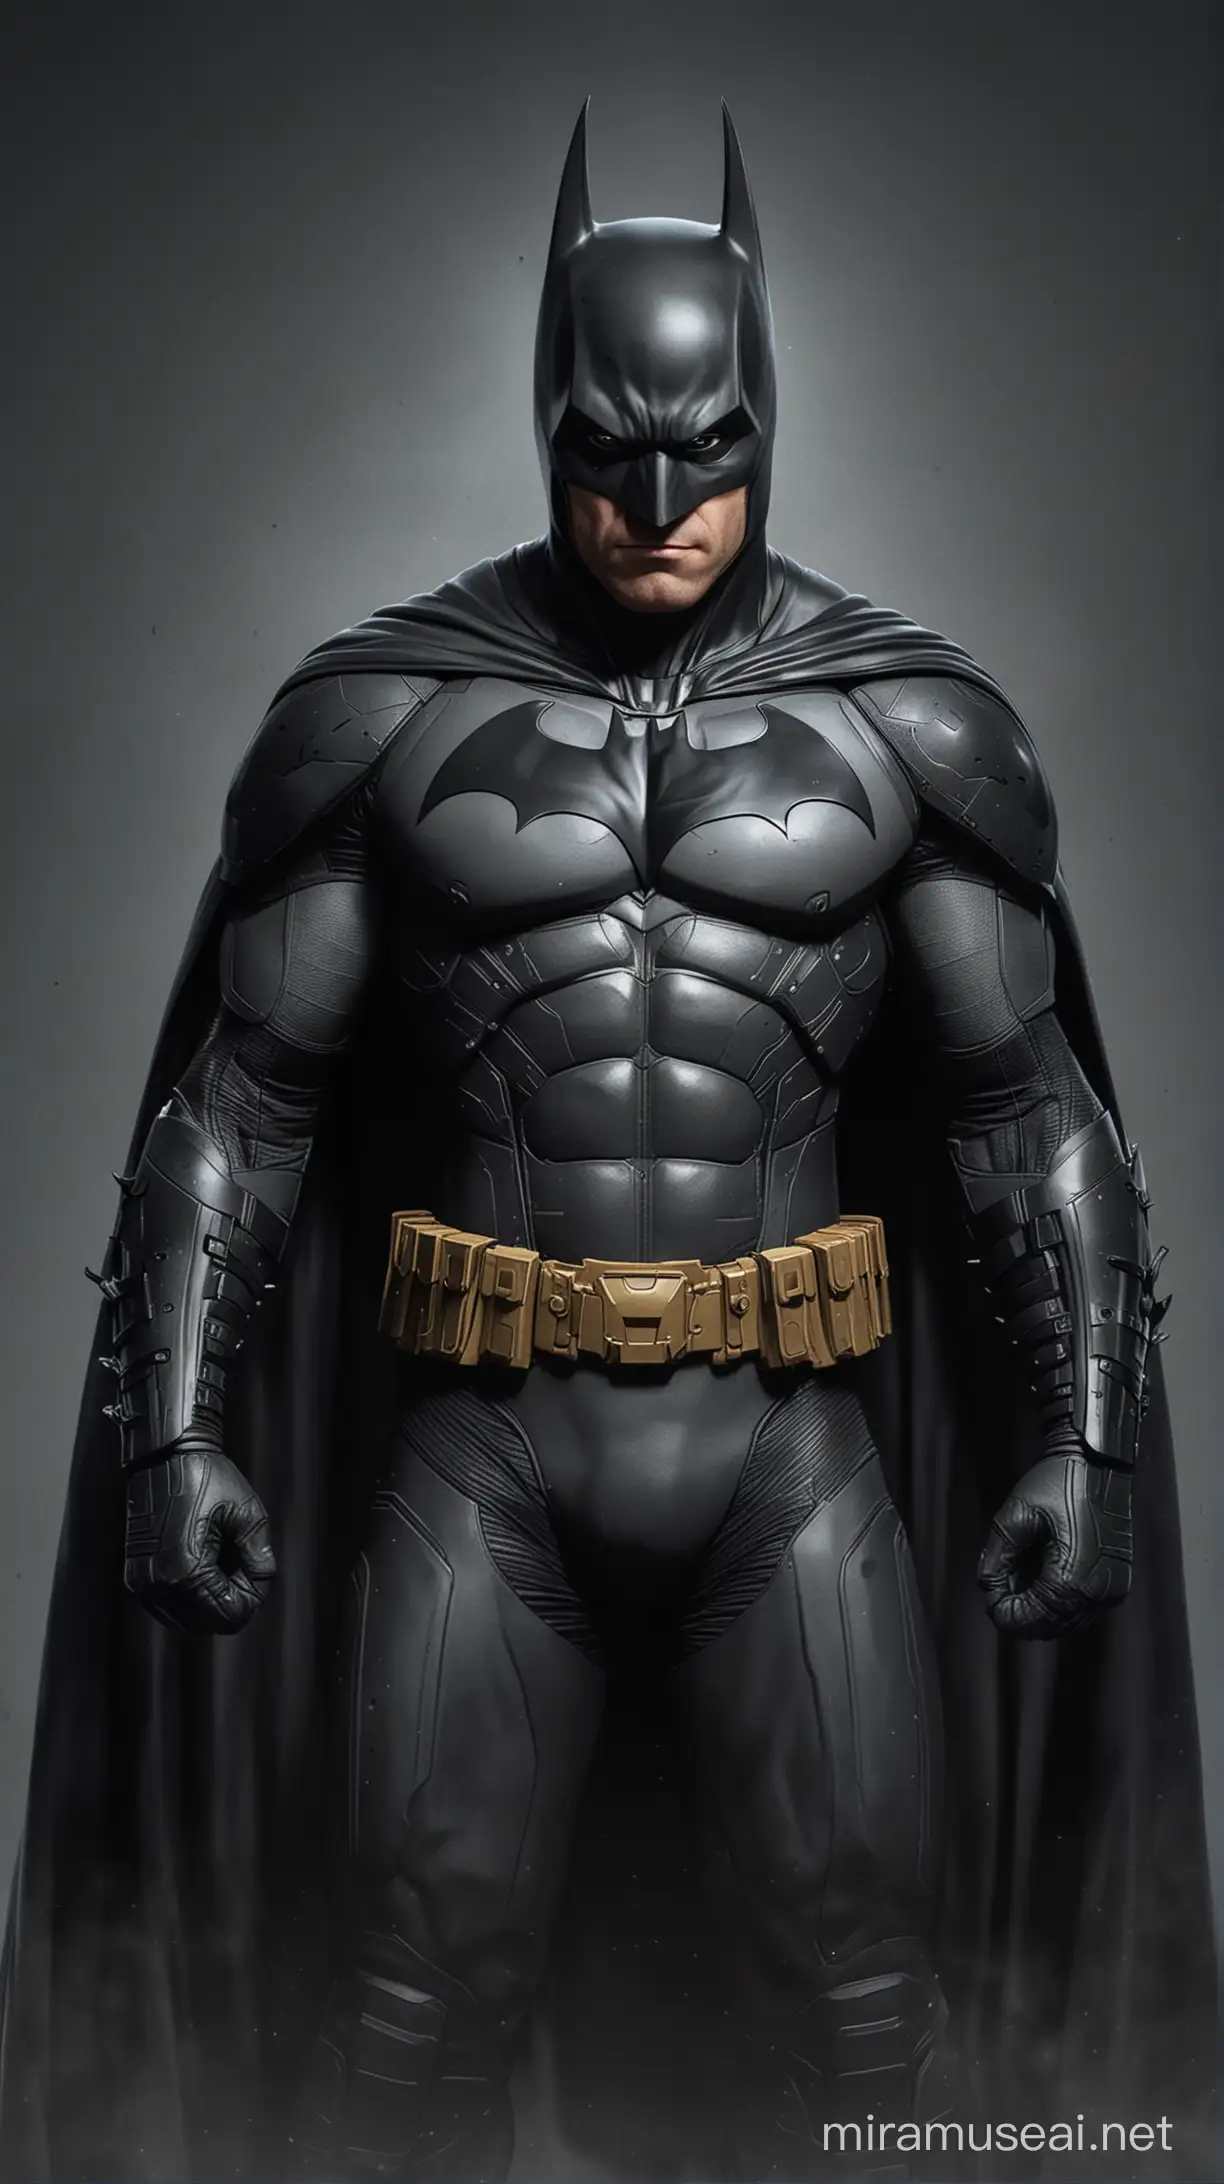 Dark Knight Vigilante Patrolling Gotham City Streets at Night